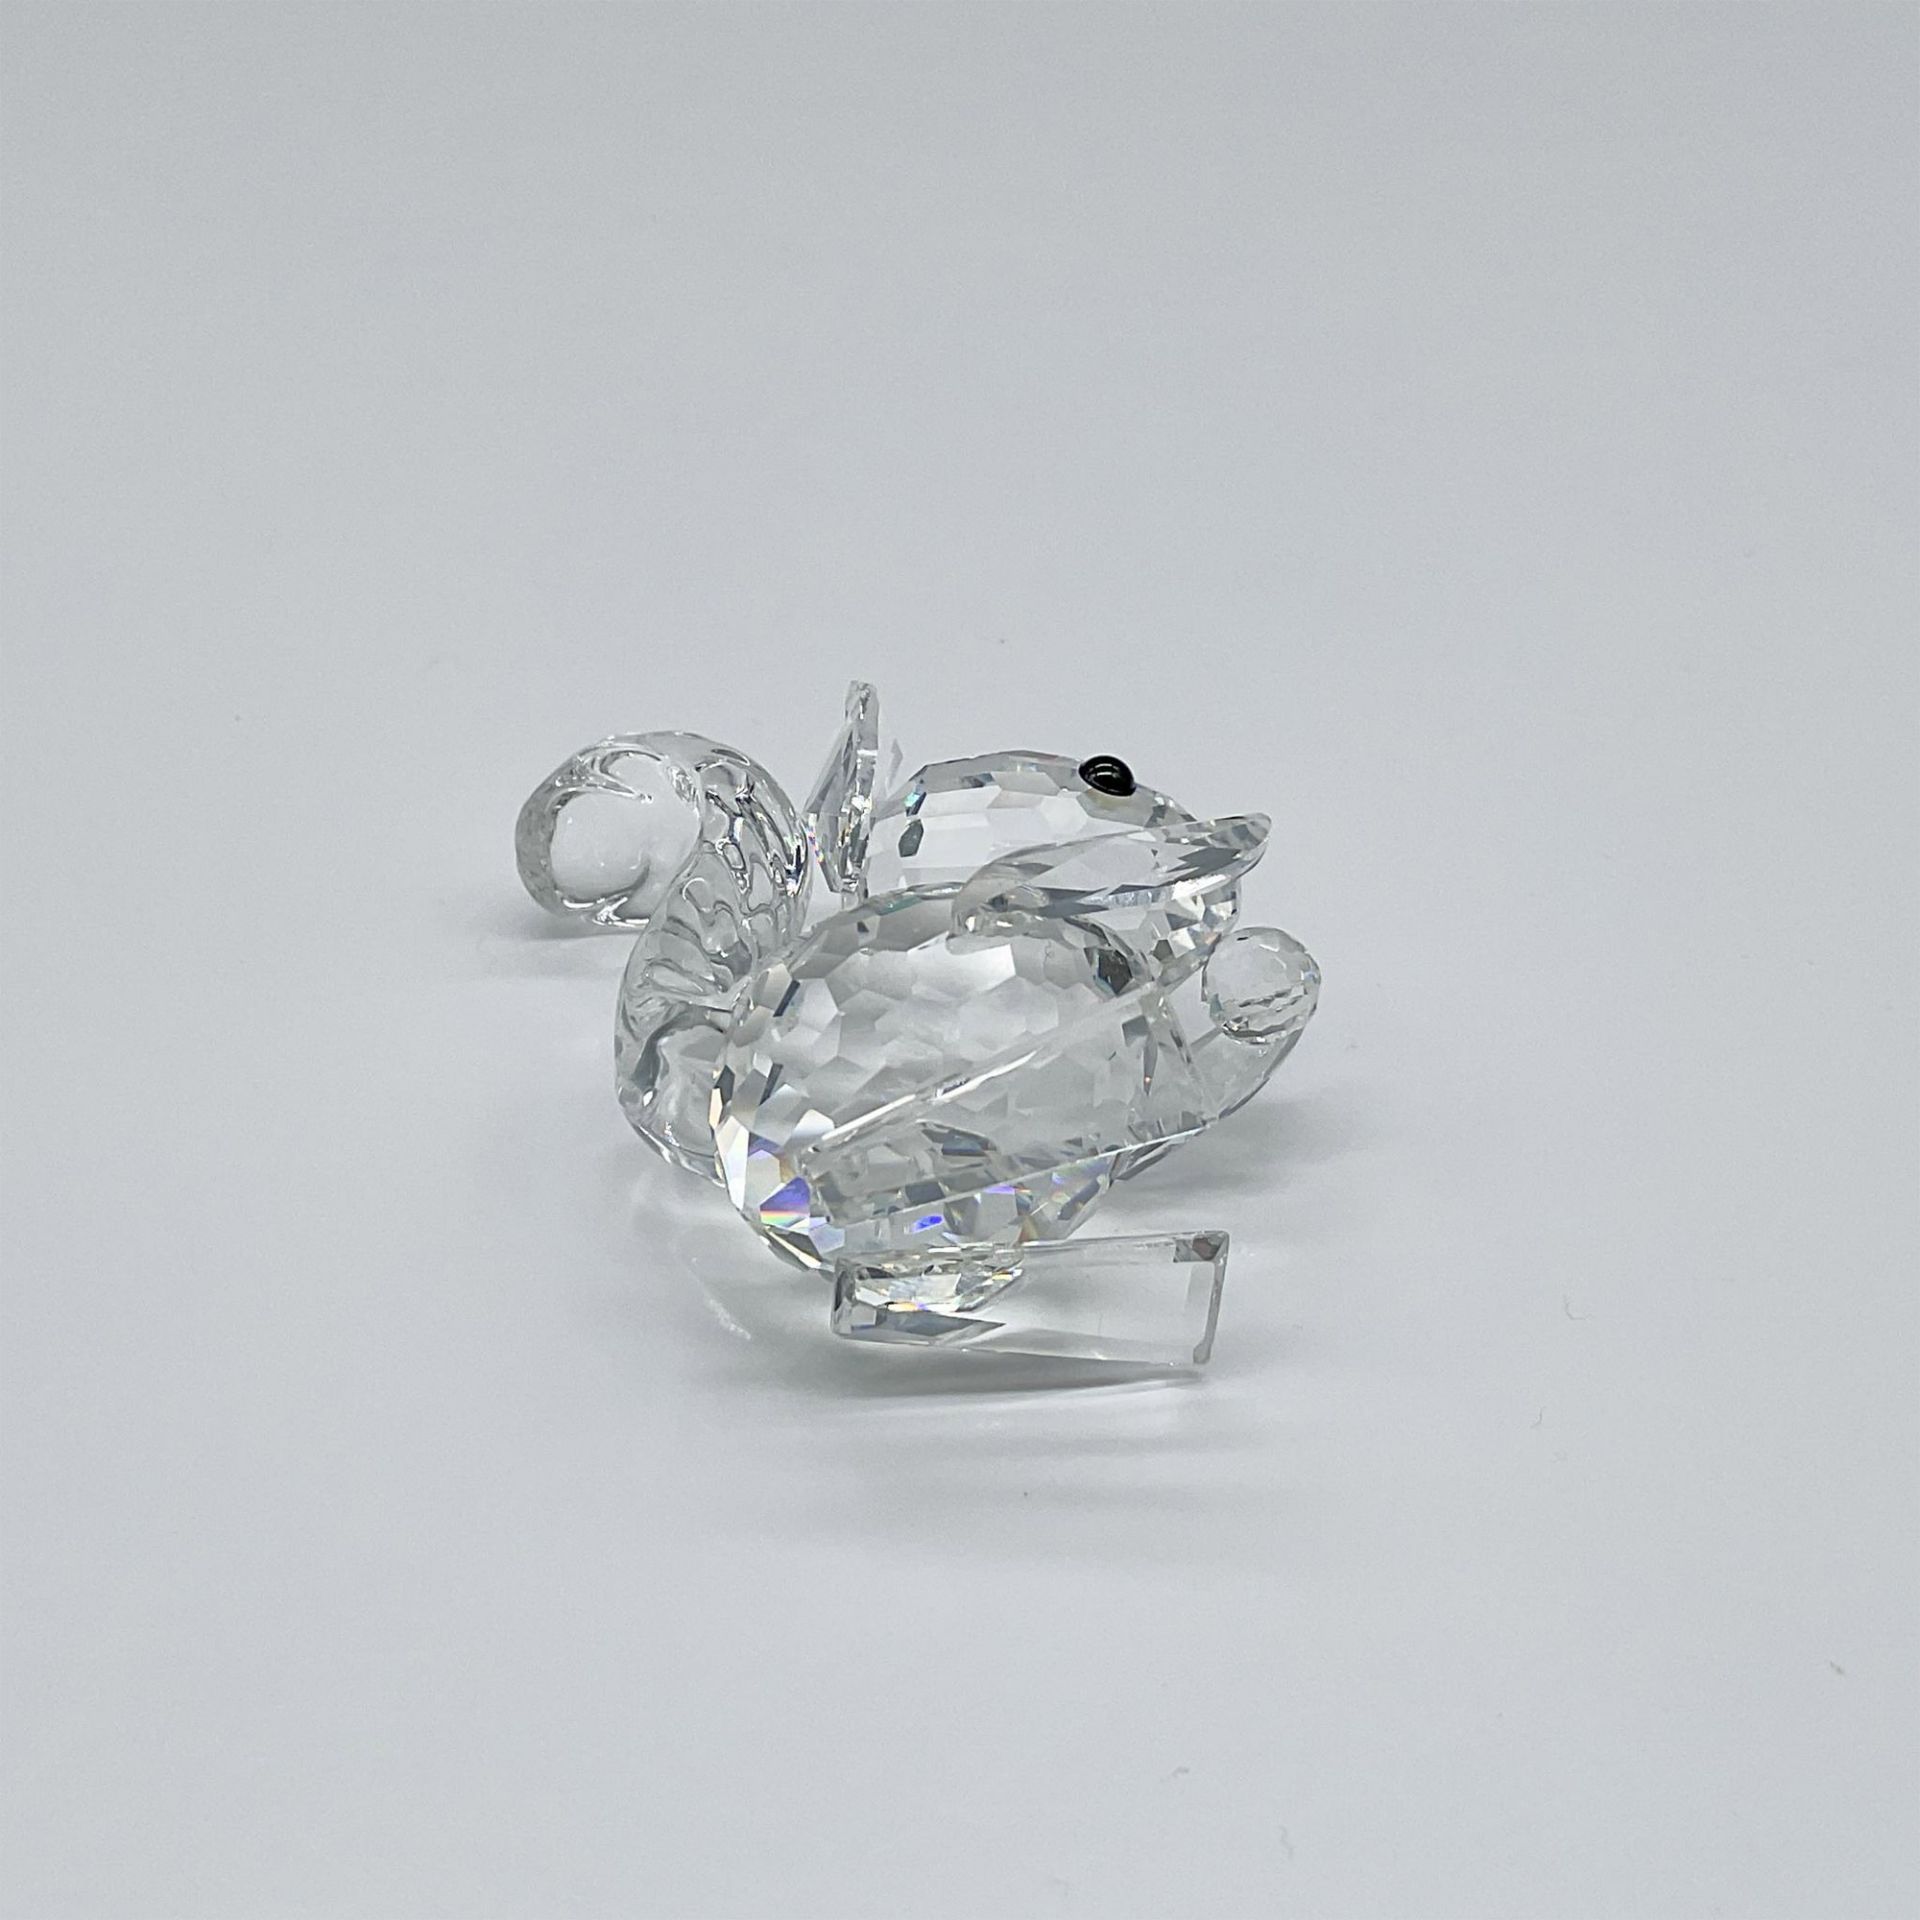 Swarovski Silver Crystal Figurine, Squirrel Long Ears - Image 3 of 4